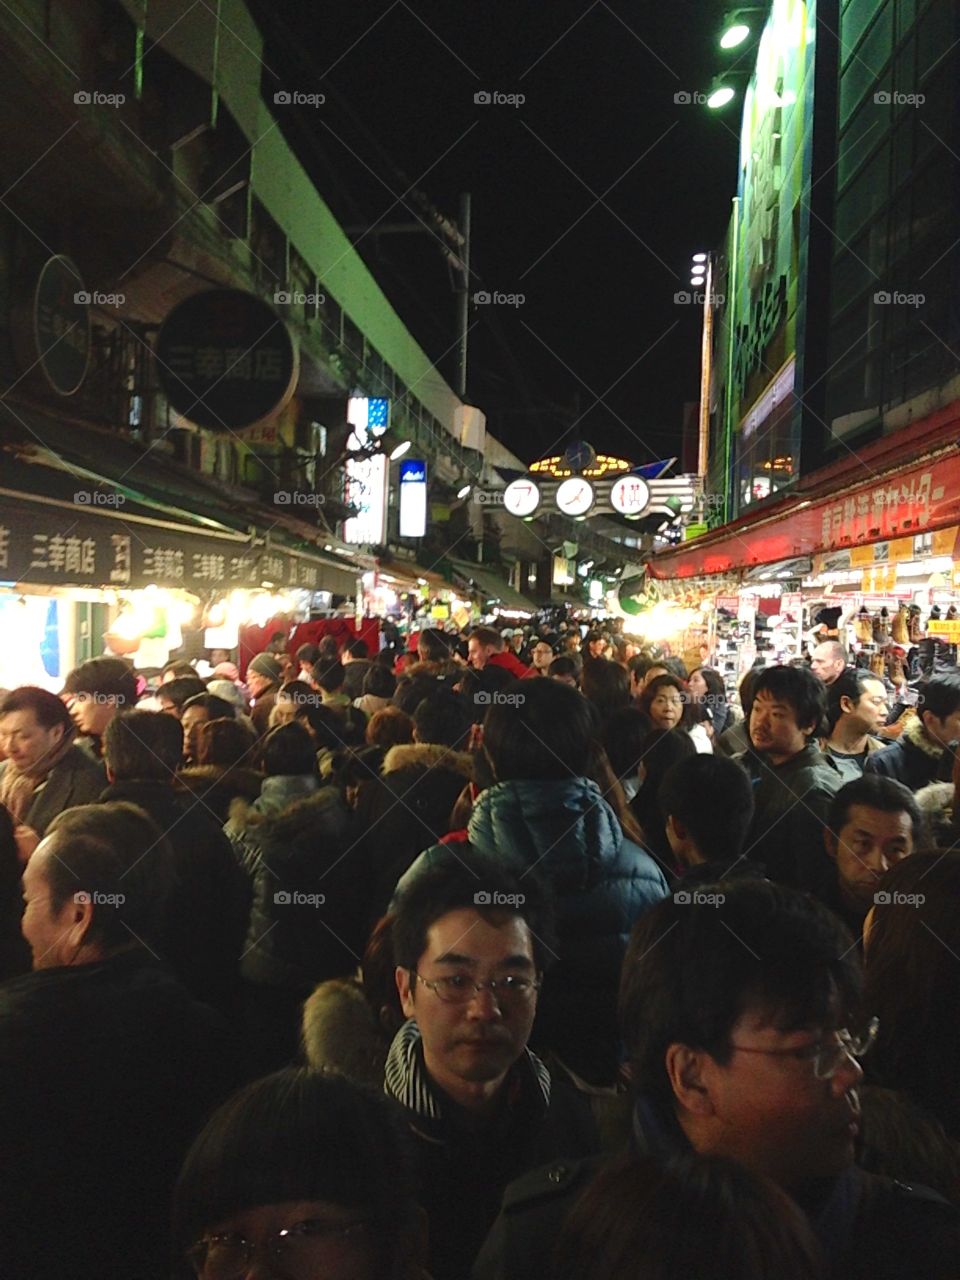 Crowded Ameyoko Market. Very crowded night on Dec 30, 2014. 